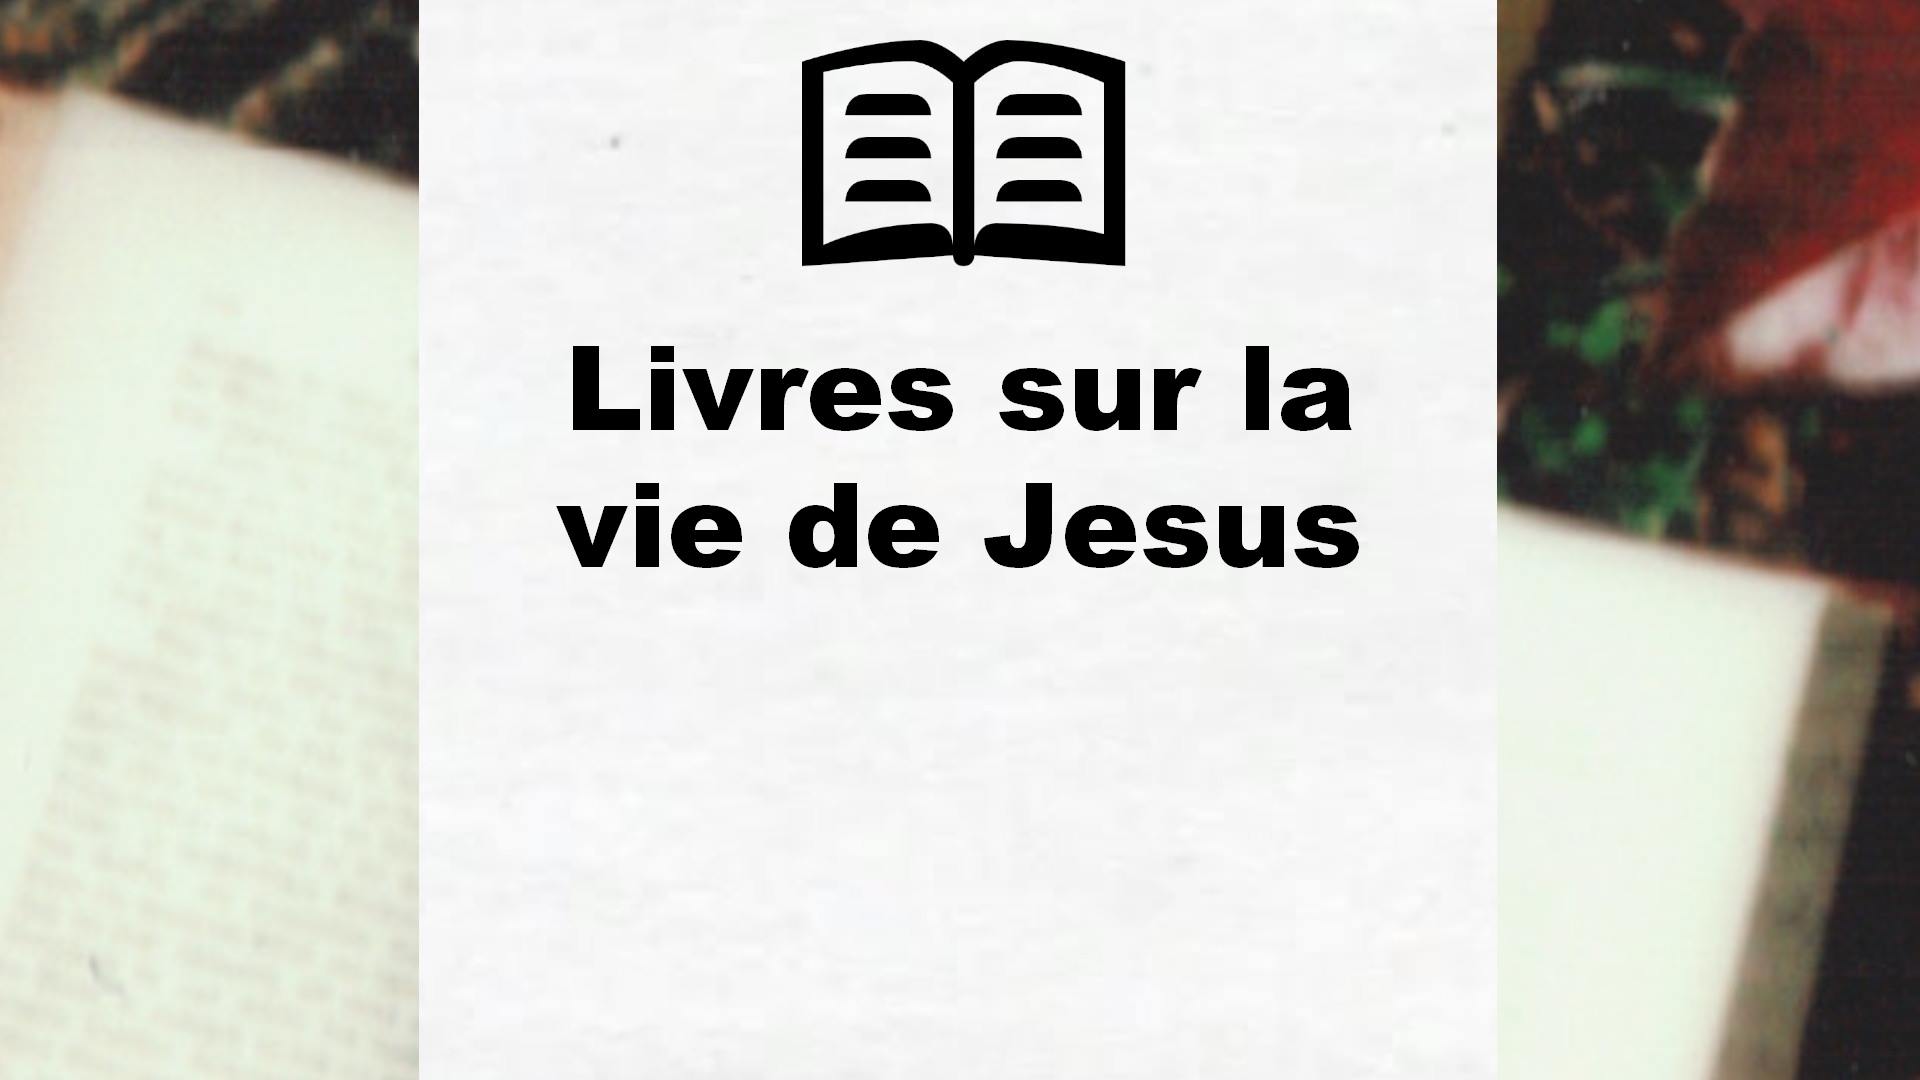 Livres sur la vie de Jesus